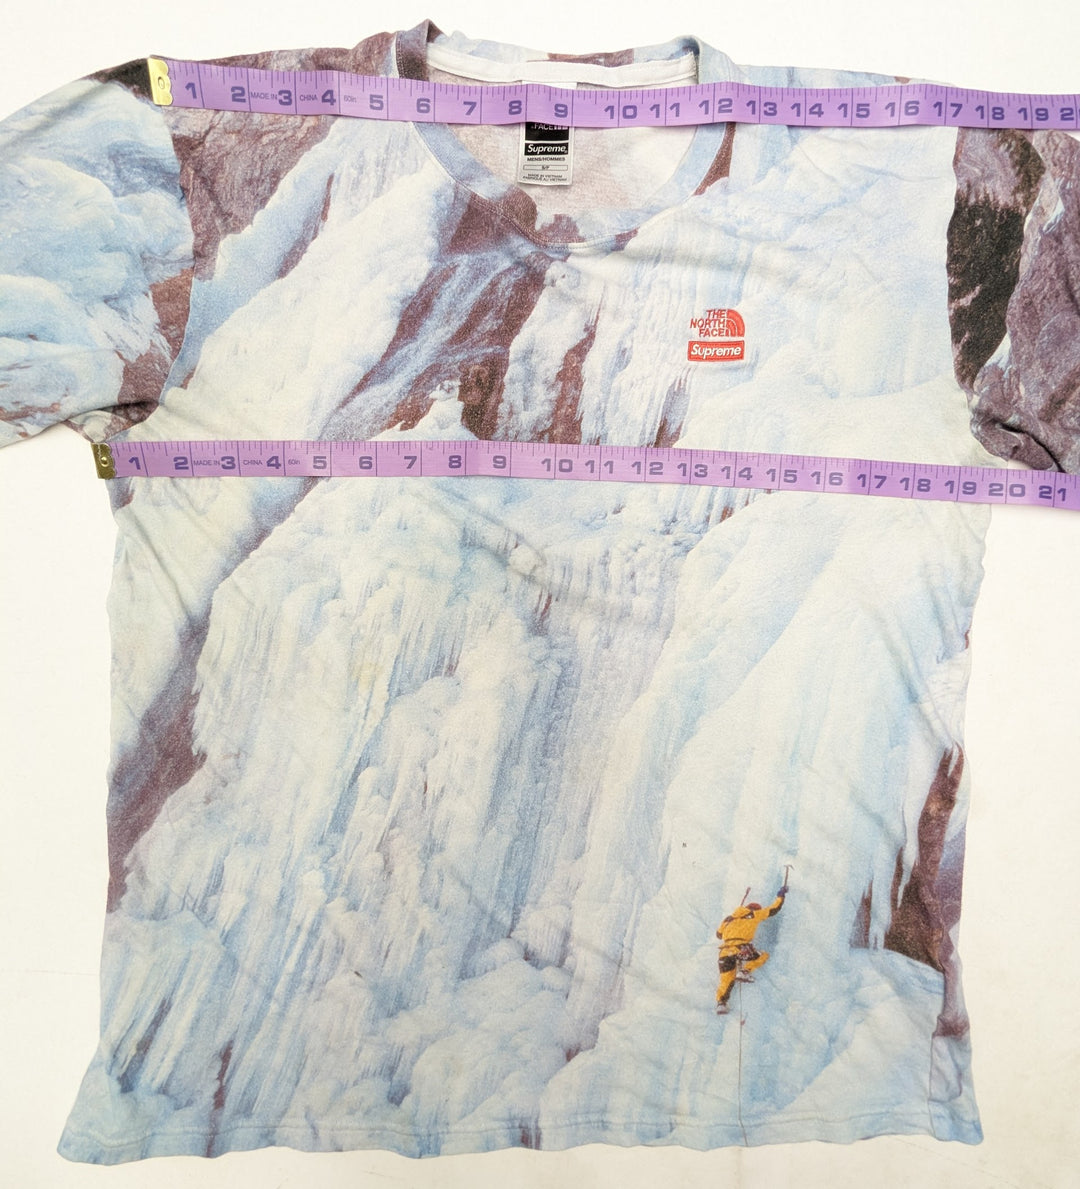 The North Face x Supreme T-Shirt 1 pc 1 lb E0122214 - Raghouse